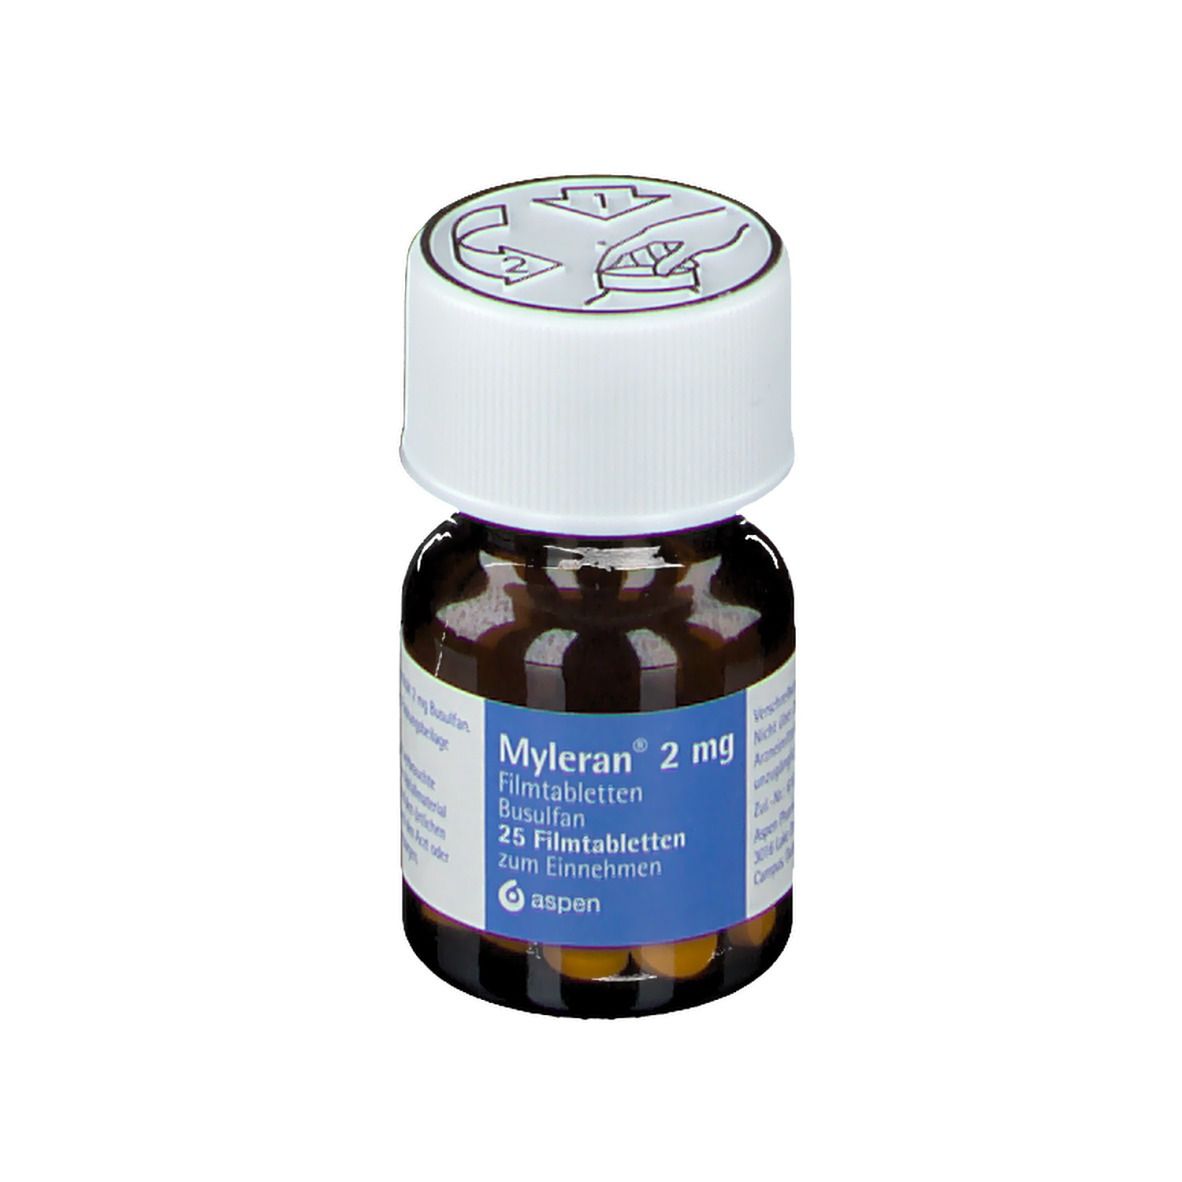 Myleran® 2 mg